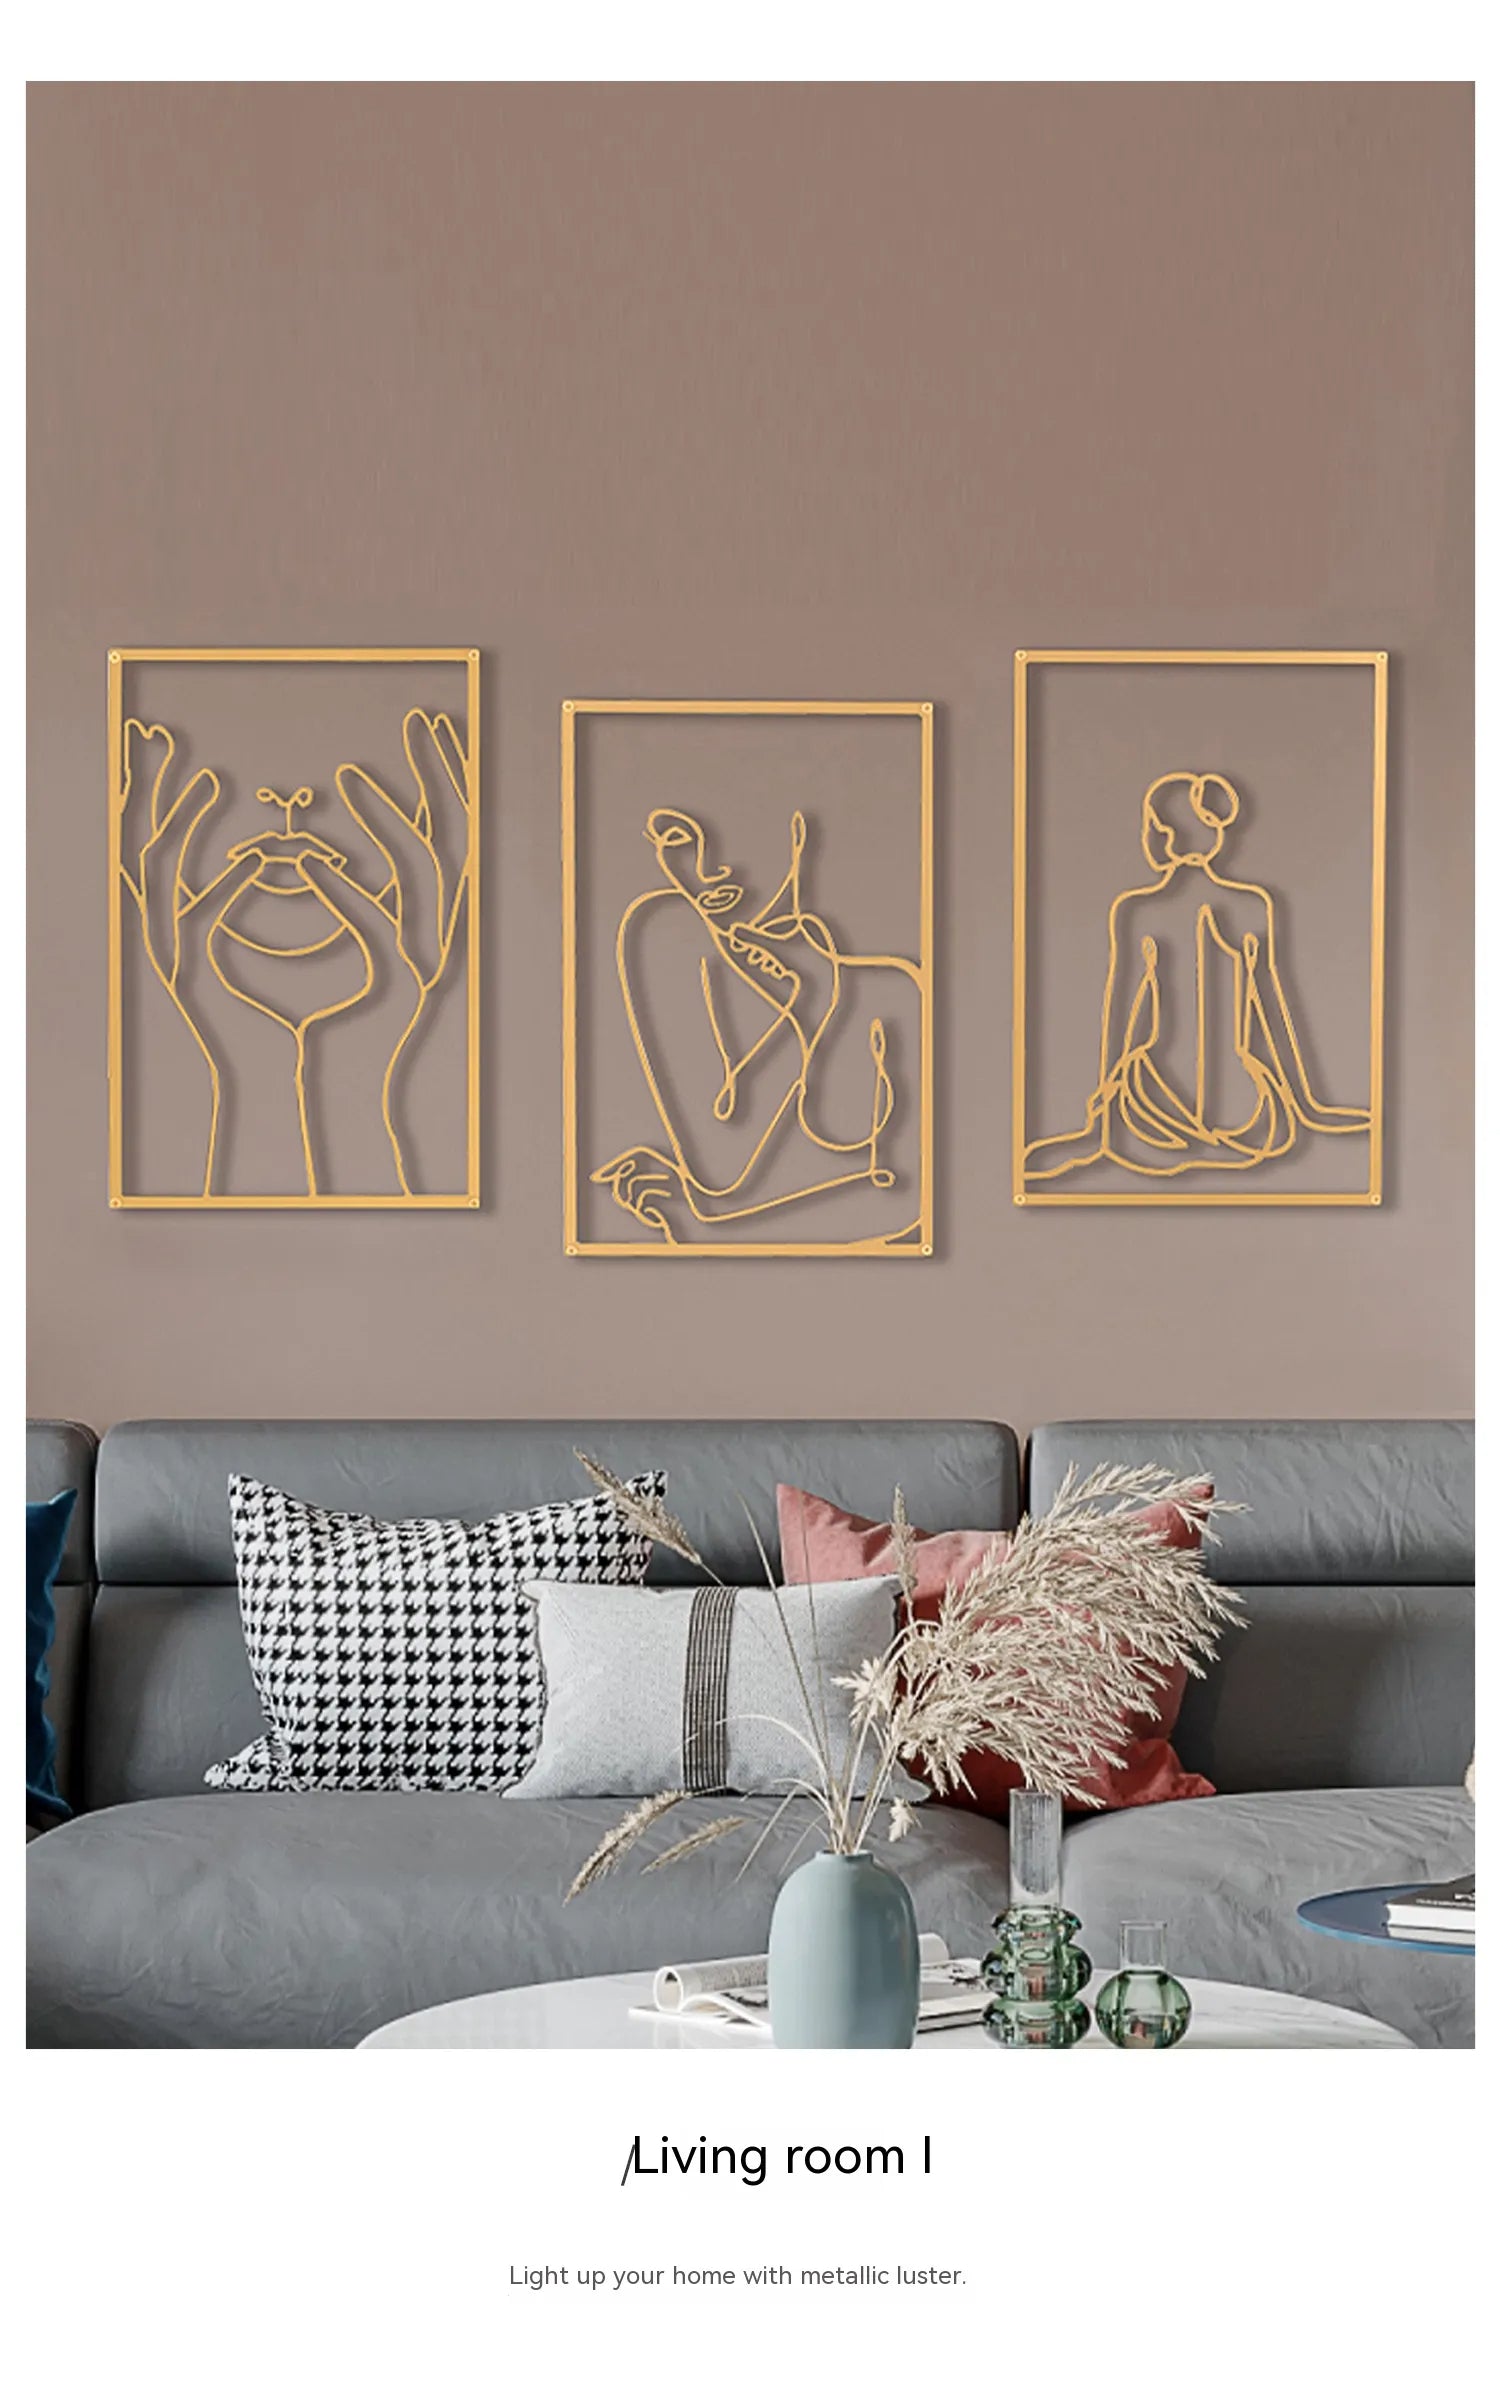 Simple Metalwork Line Art Figure Art Abstract Minimalist Wall Decoration For Bedroom Living Room Scandinavian Interior Design Home Decor